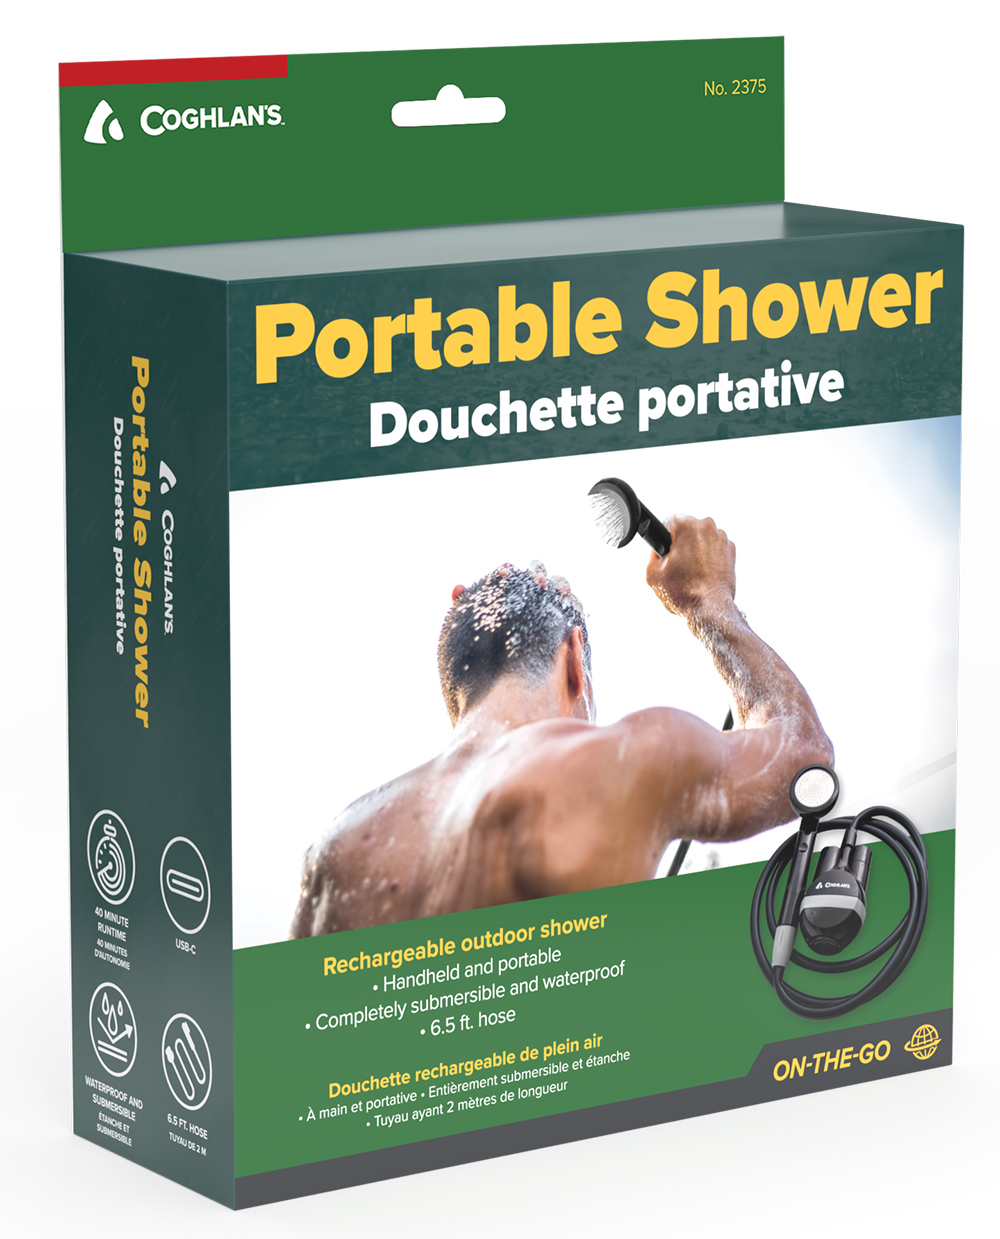 Portable shower